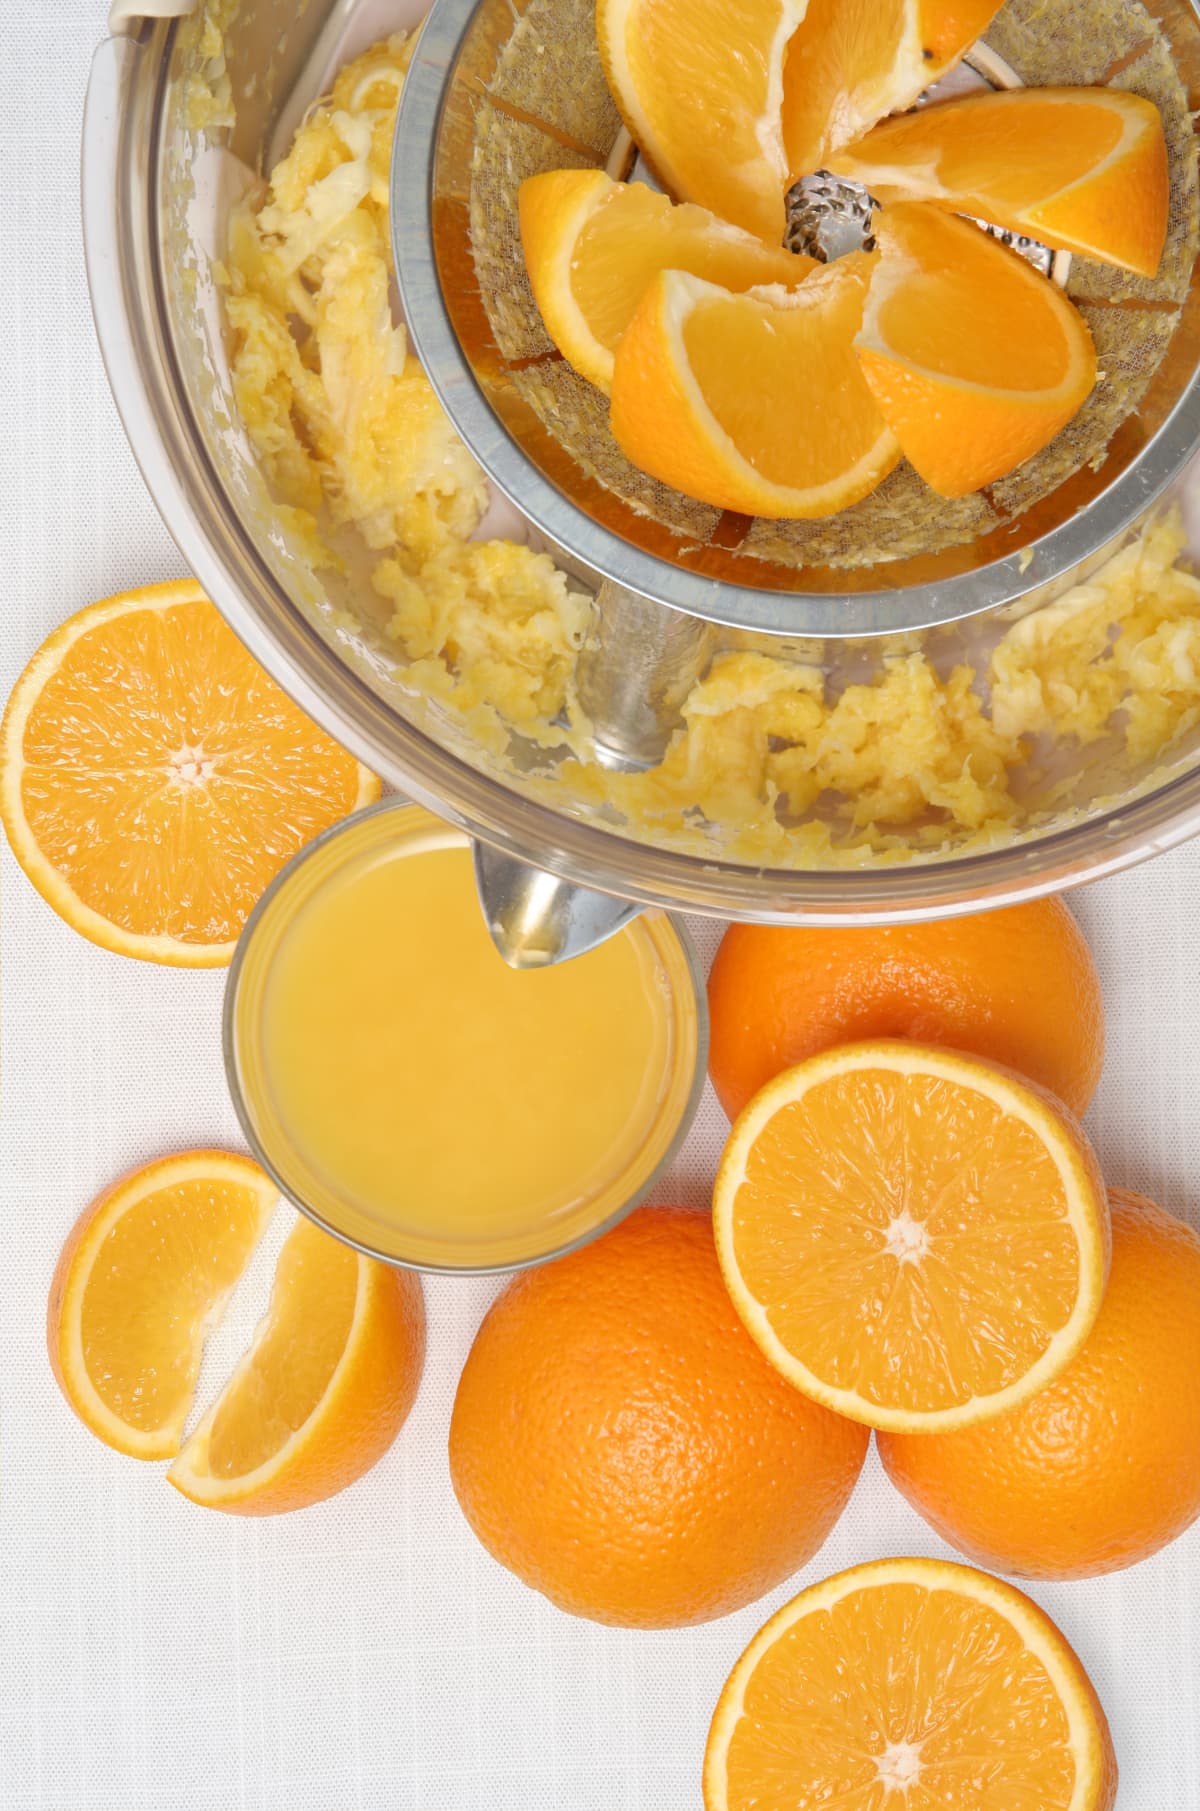 Freshly squeezed orange juice, a juicer juicing oranges, and oranges